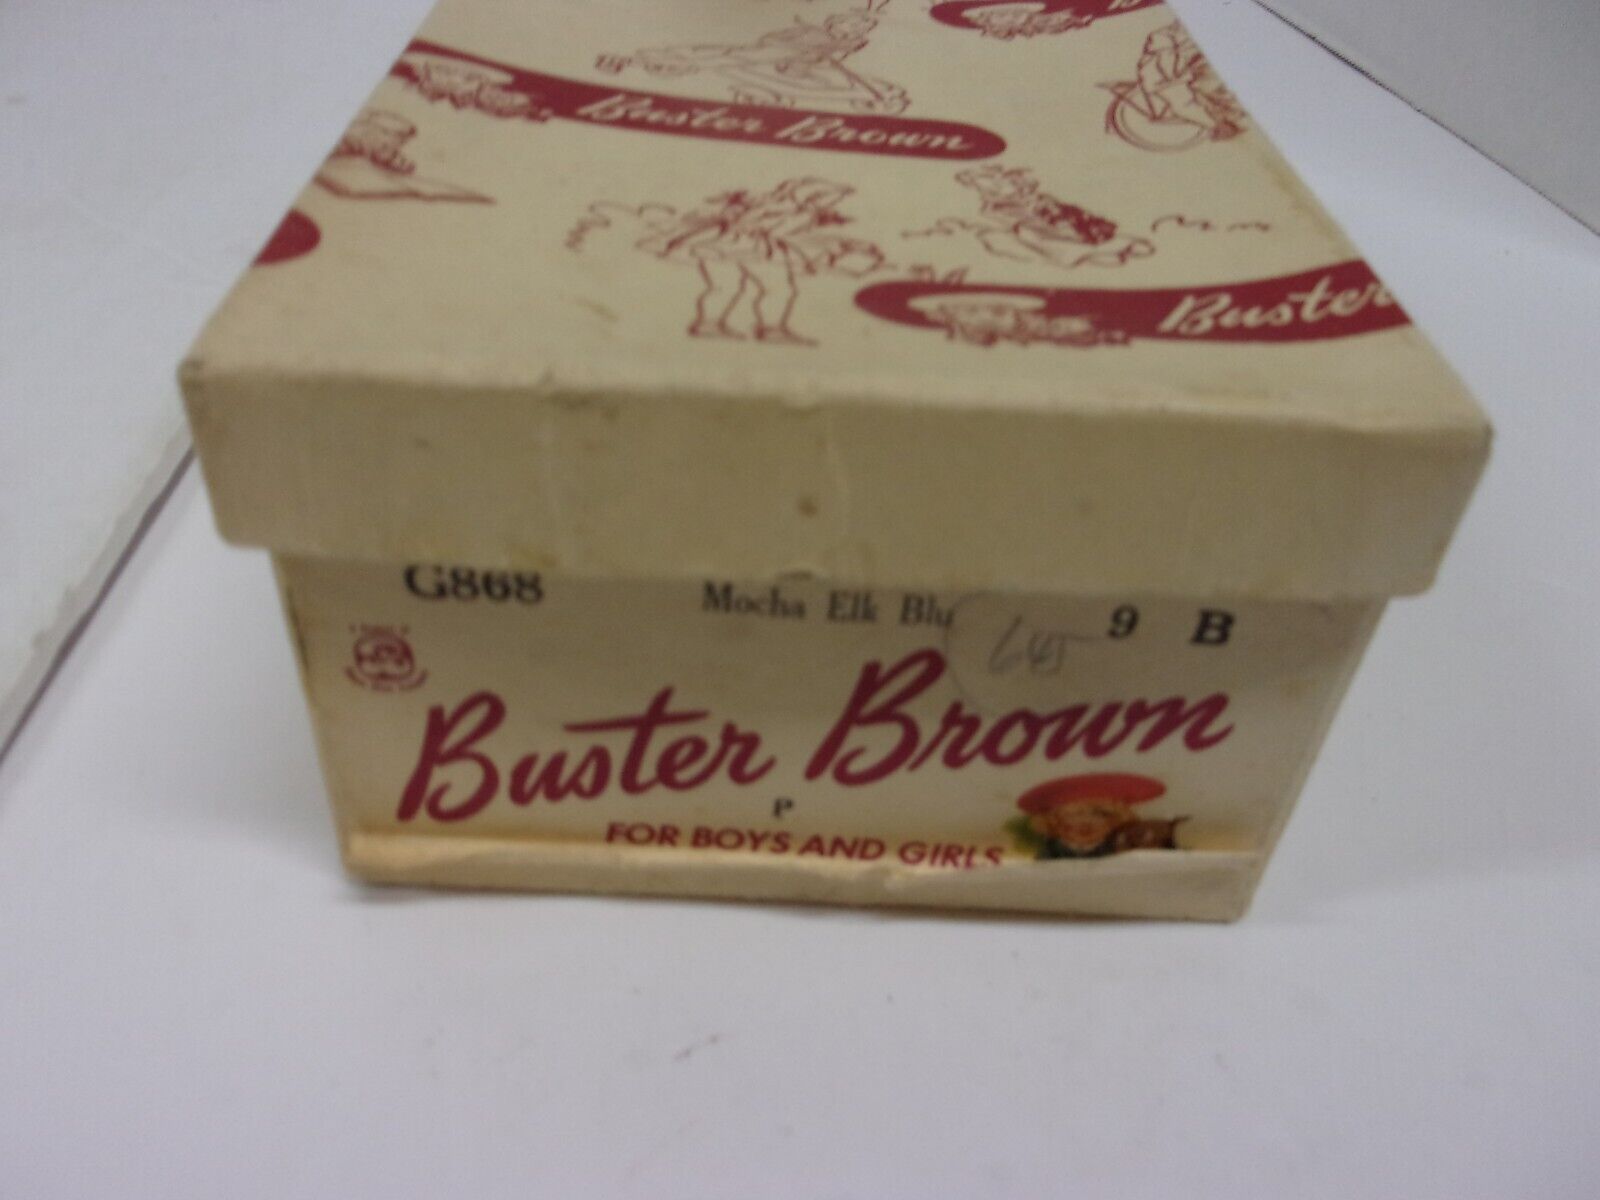 Vintage Buster Brown Shoe Box(Only) G868 Mocha Elk Blu 9 B. A Product Of Brown